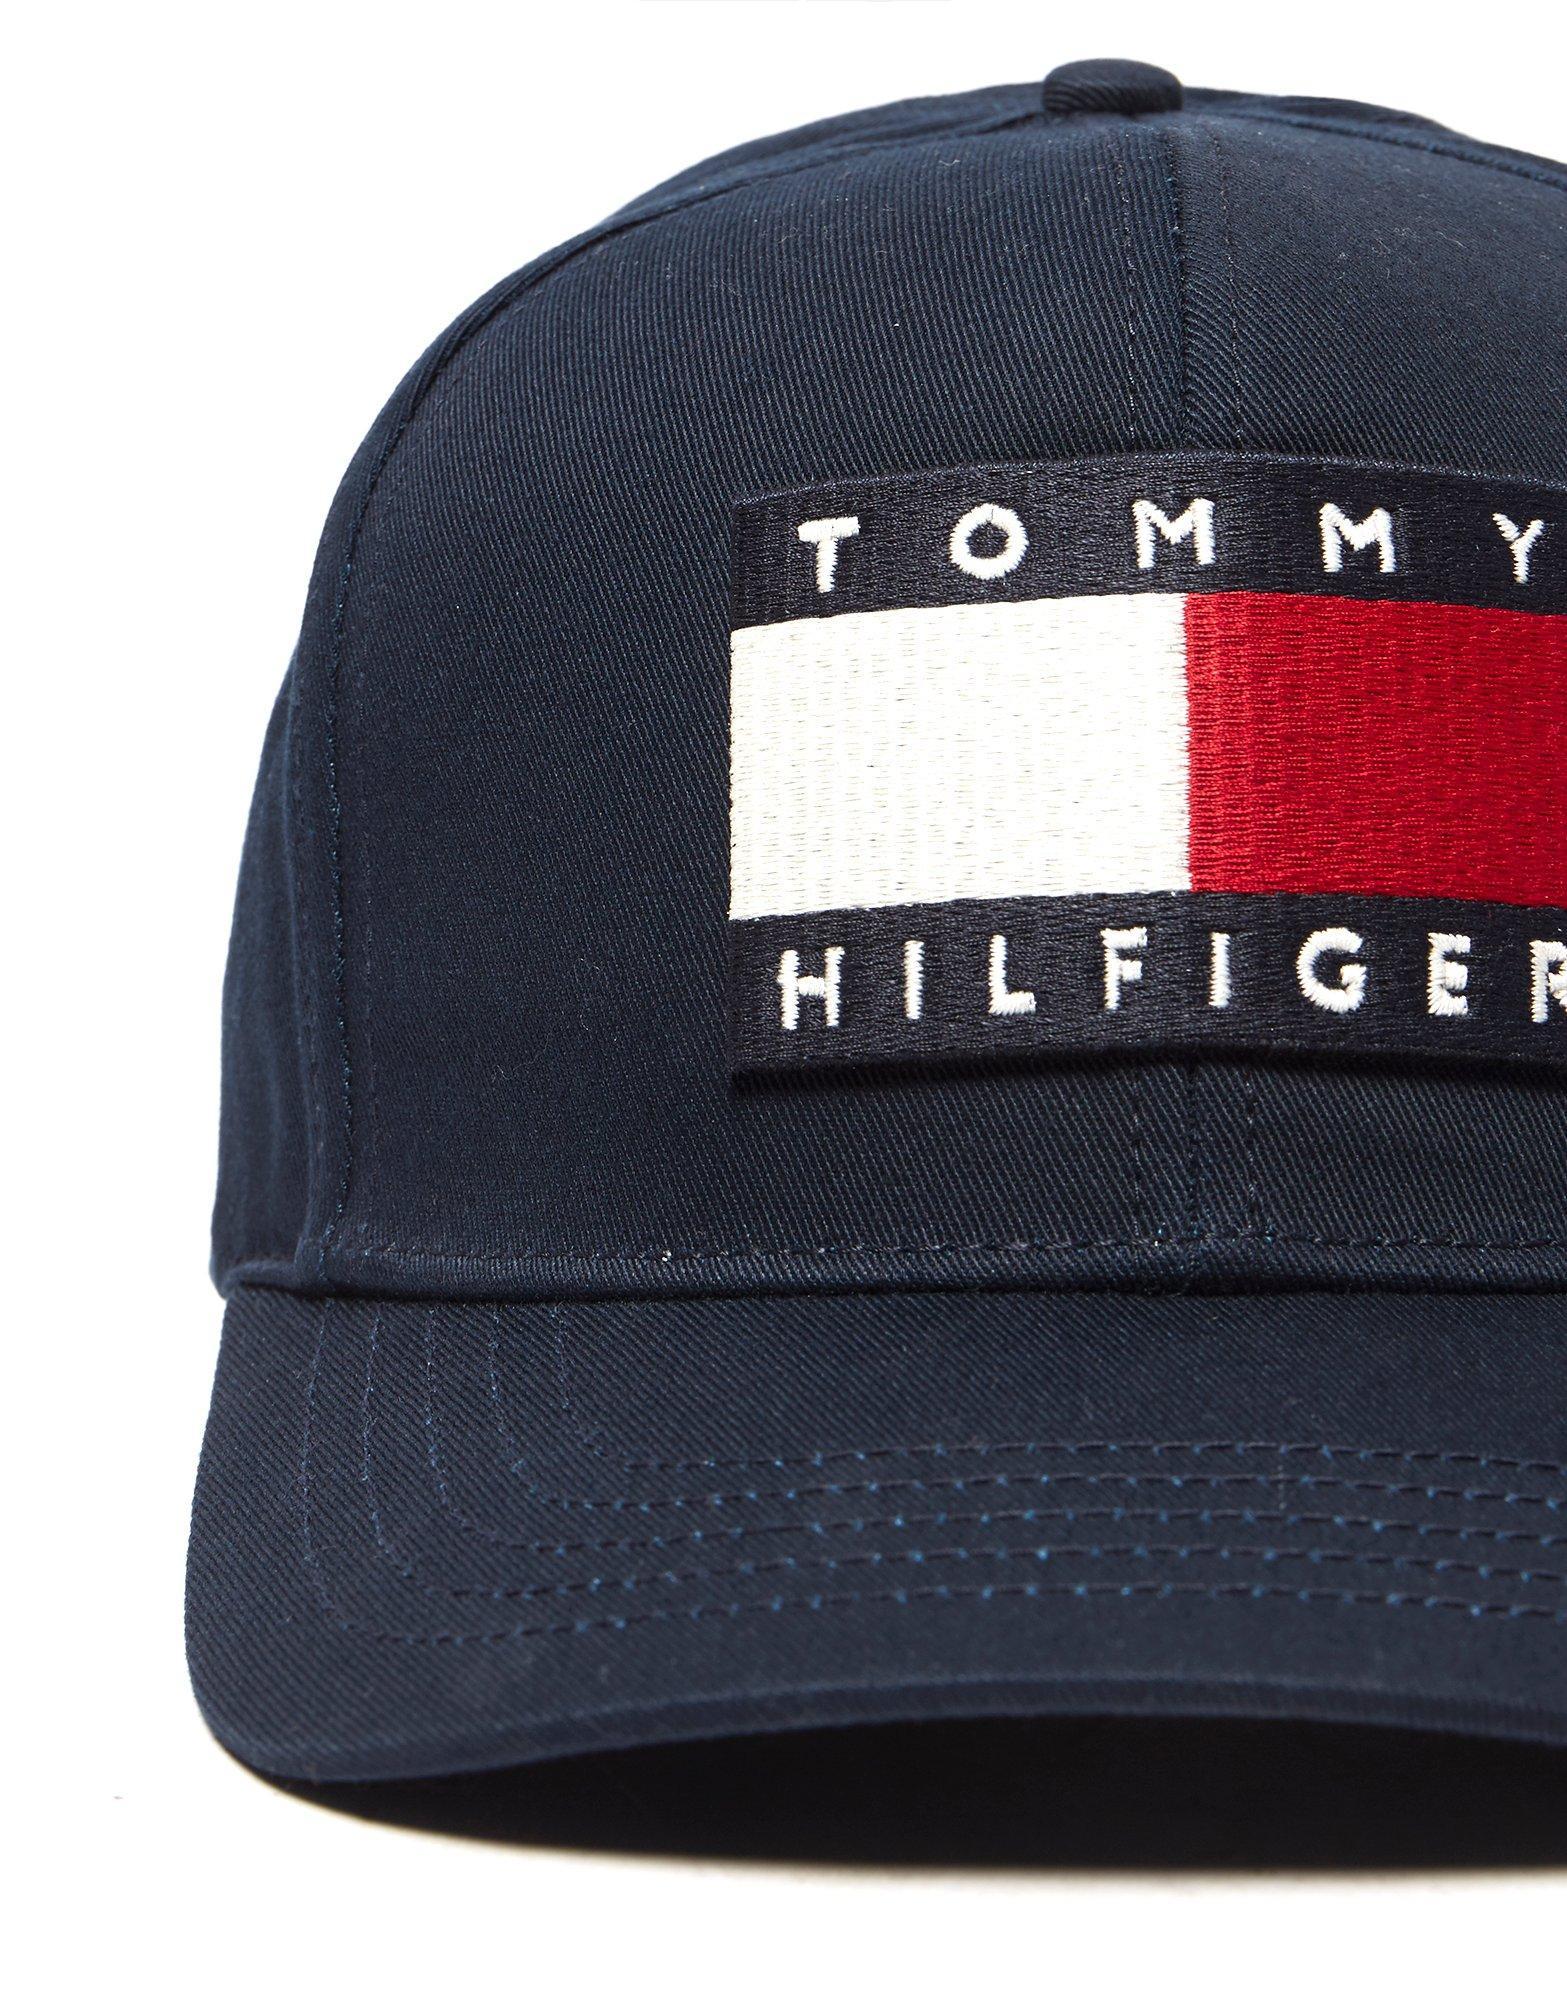 Lyst - Tommy Hilfiger Cap in Blue for Men